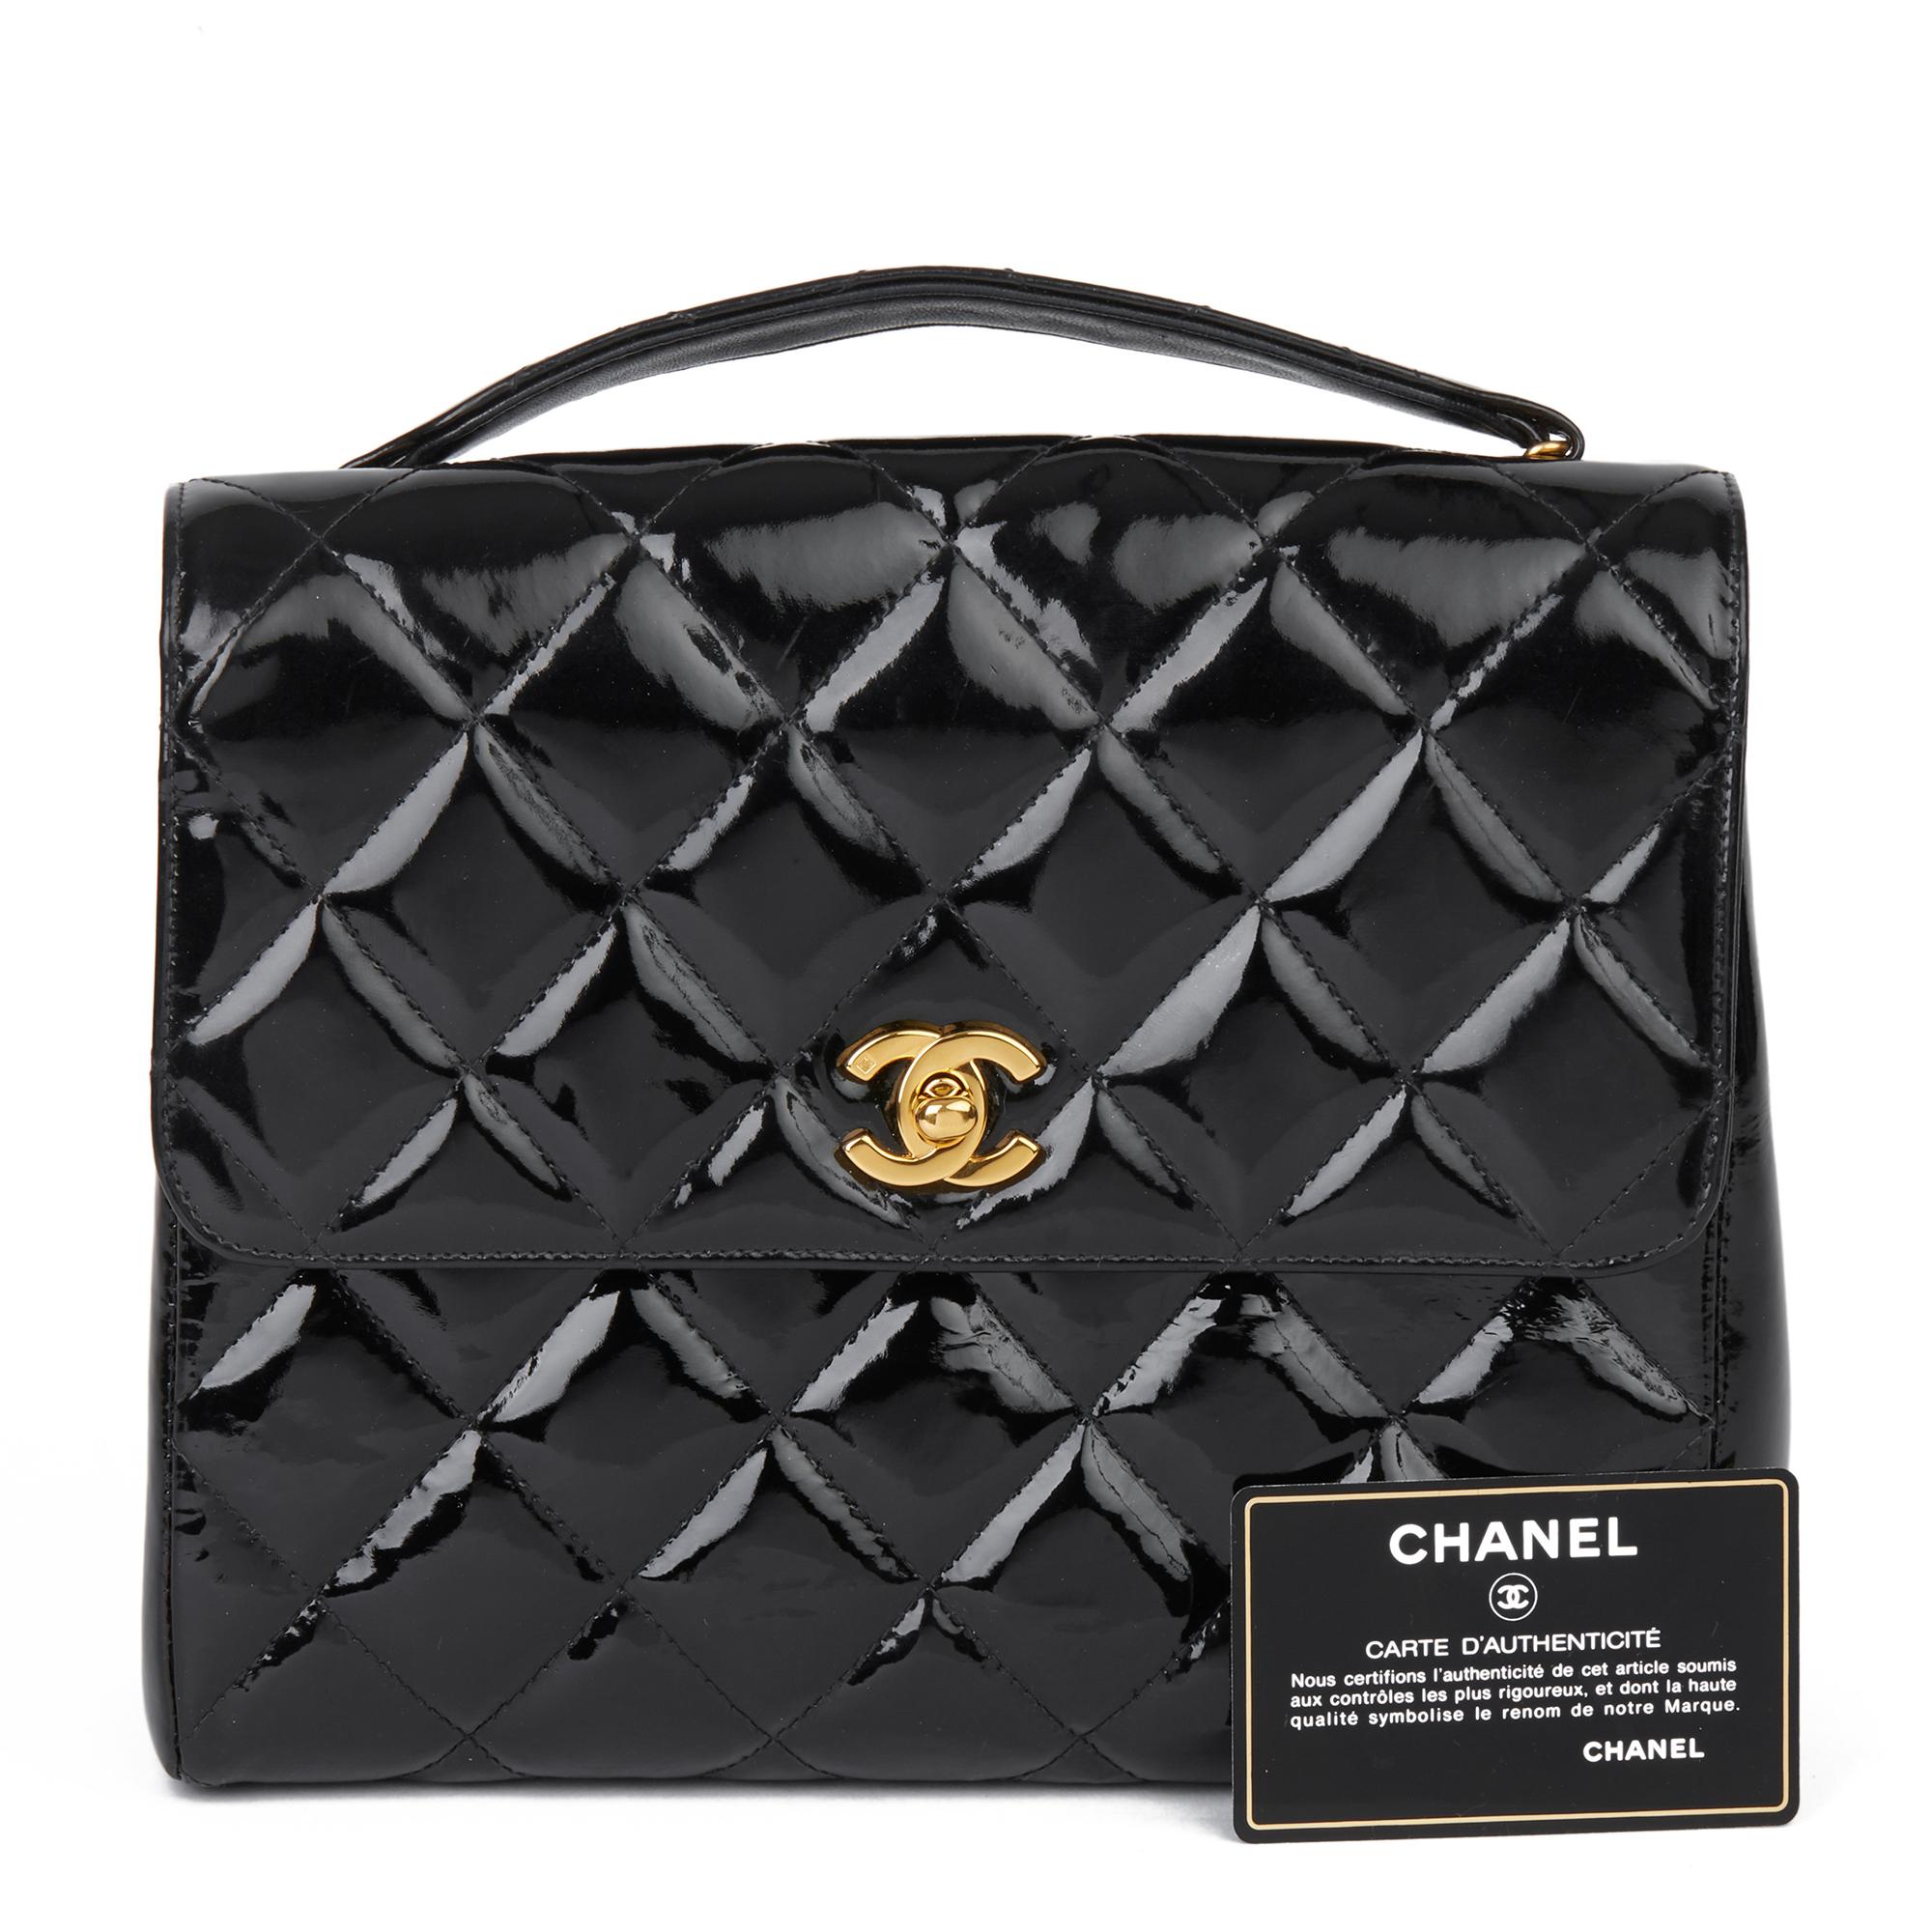 1996 Chanel Black Patent Leather Vintage Classic Single Flap Bag 8